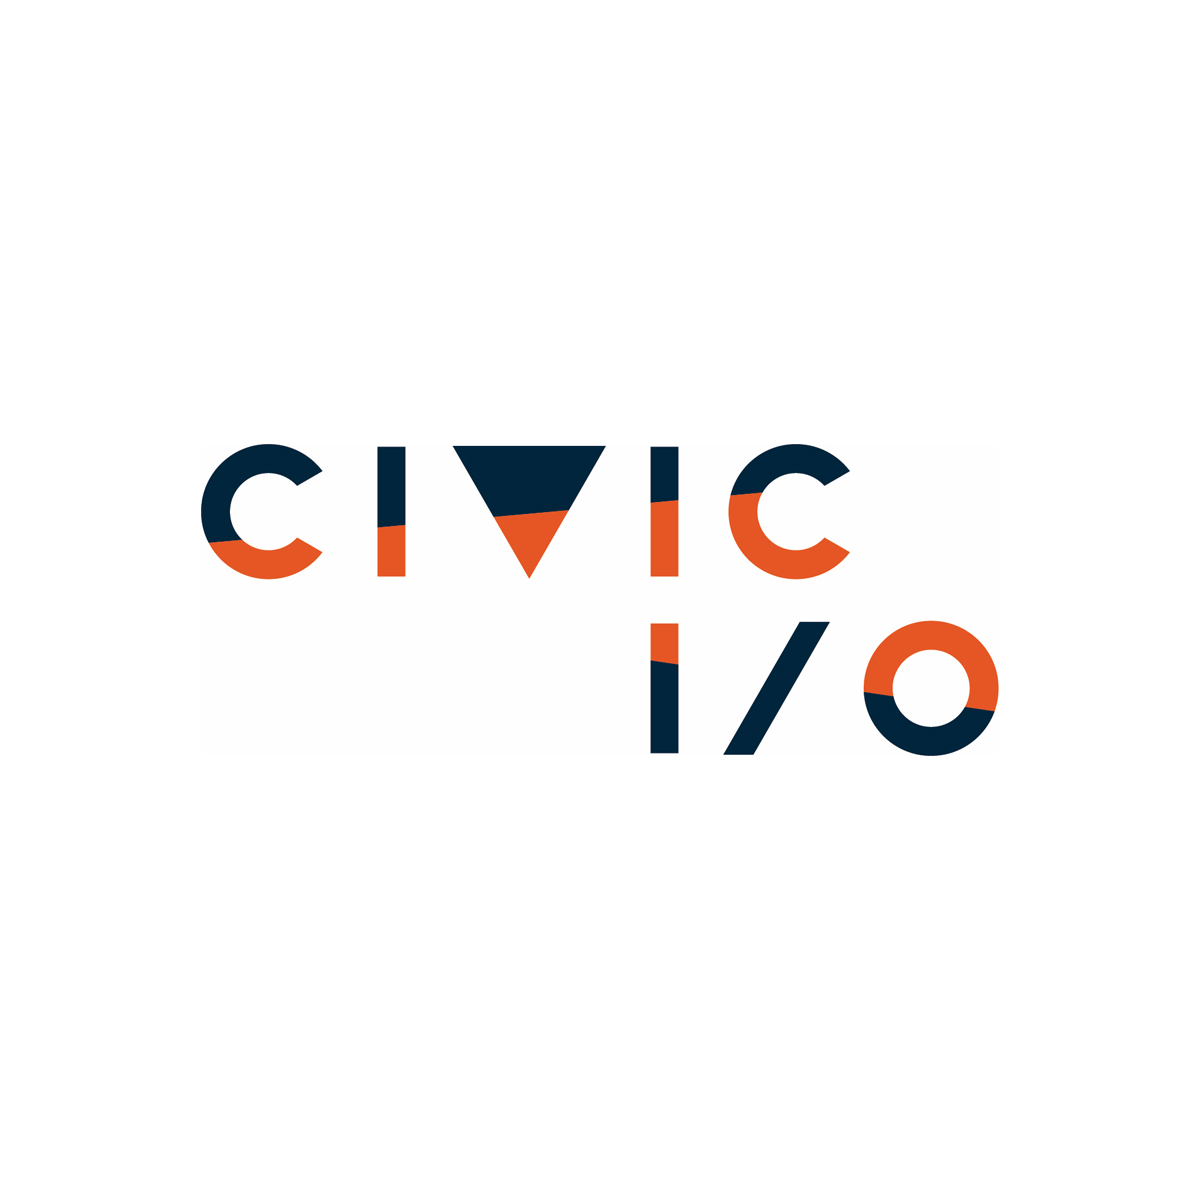 Civic I/O